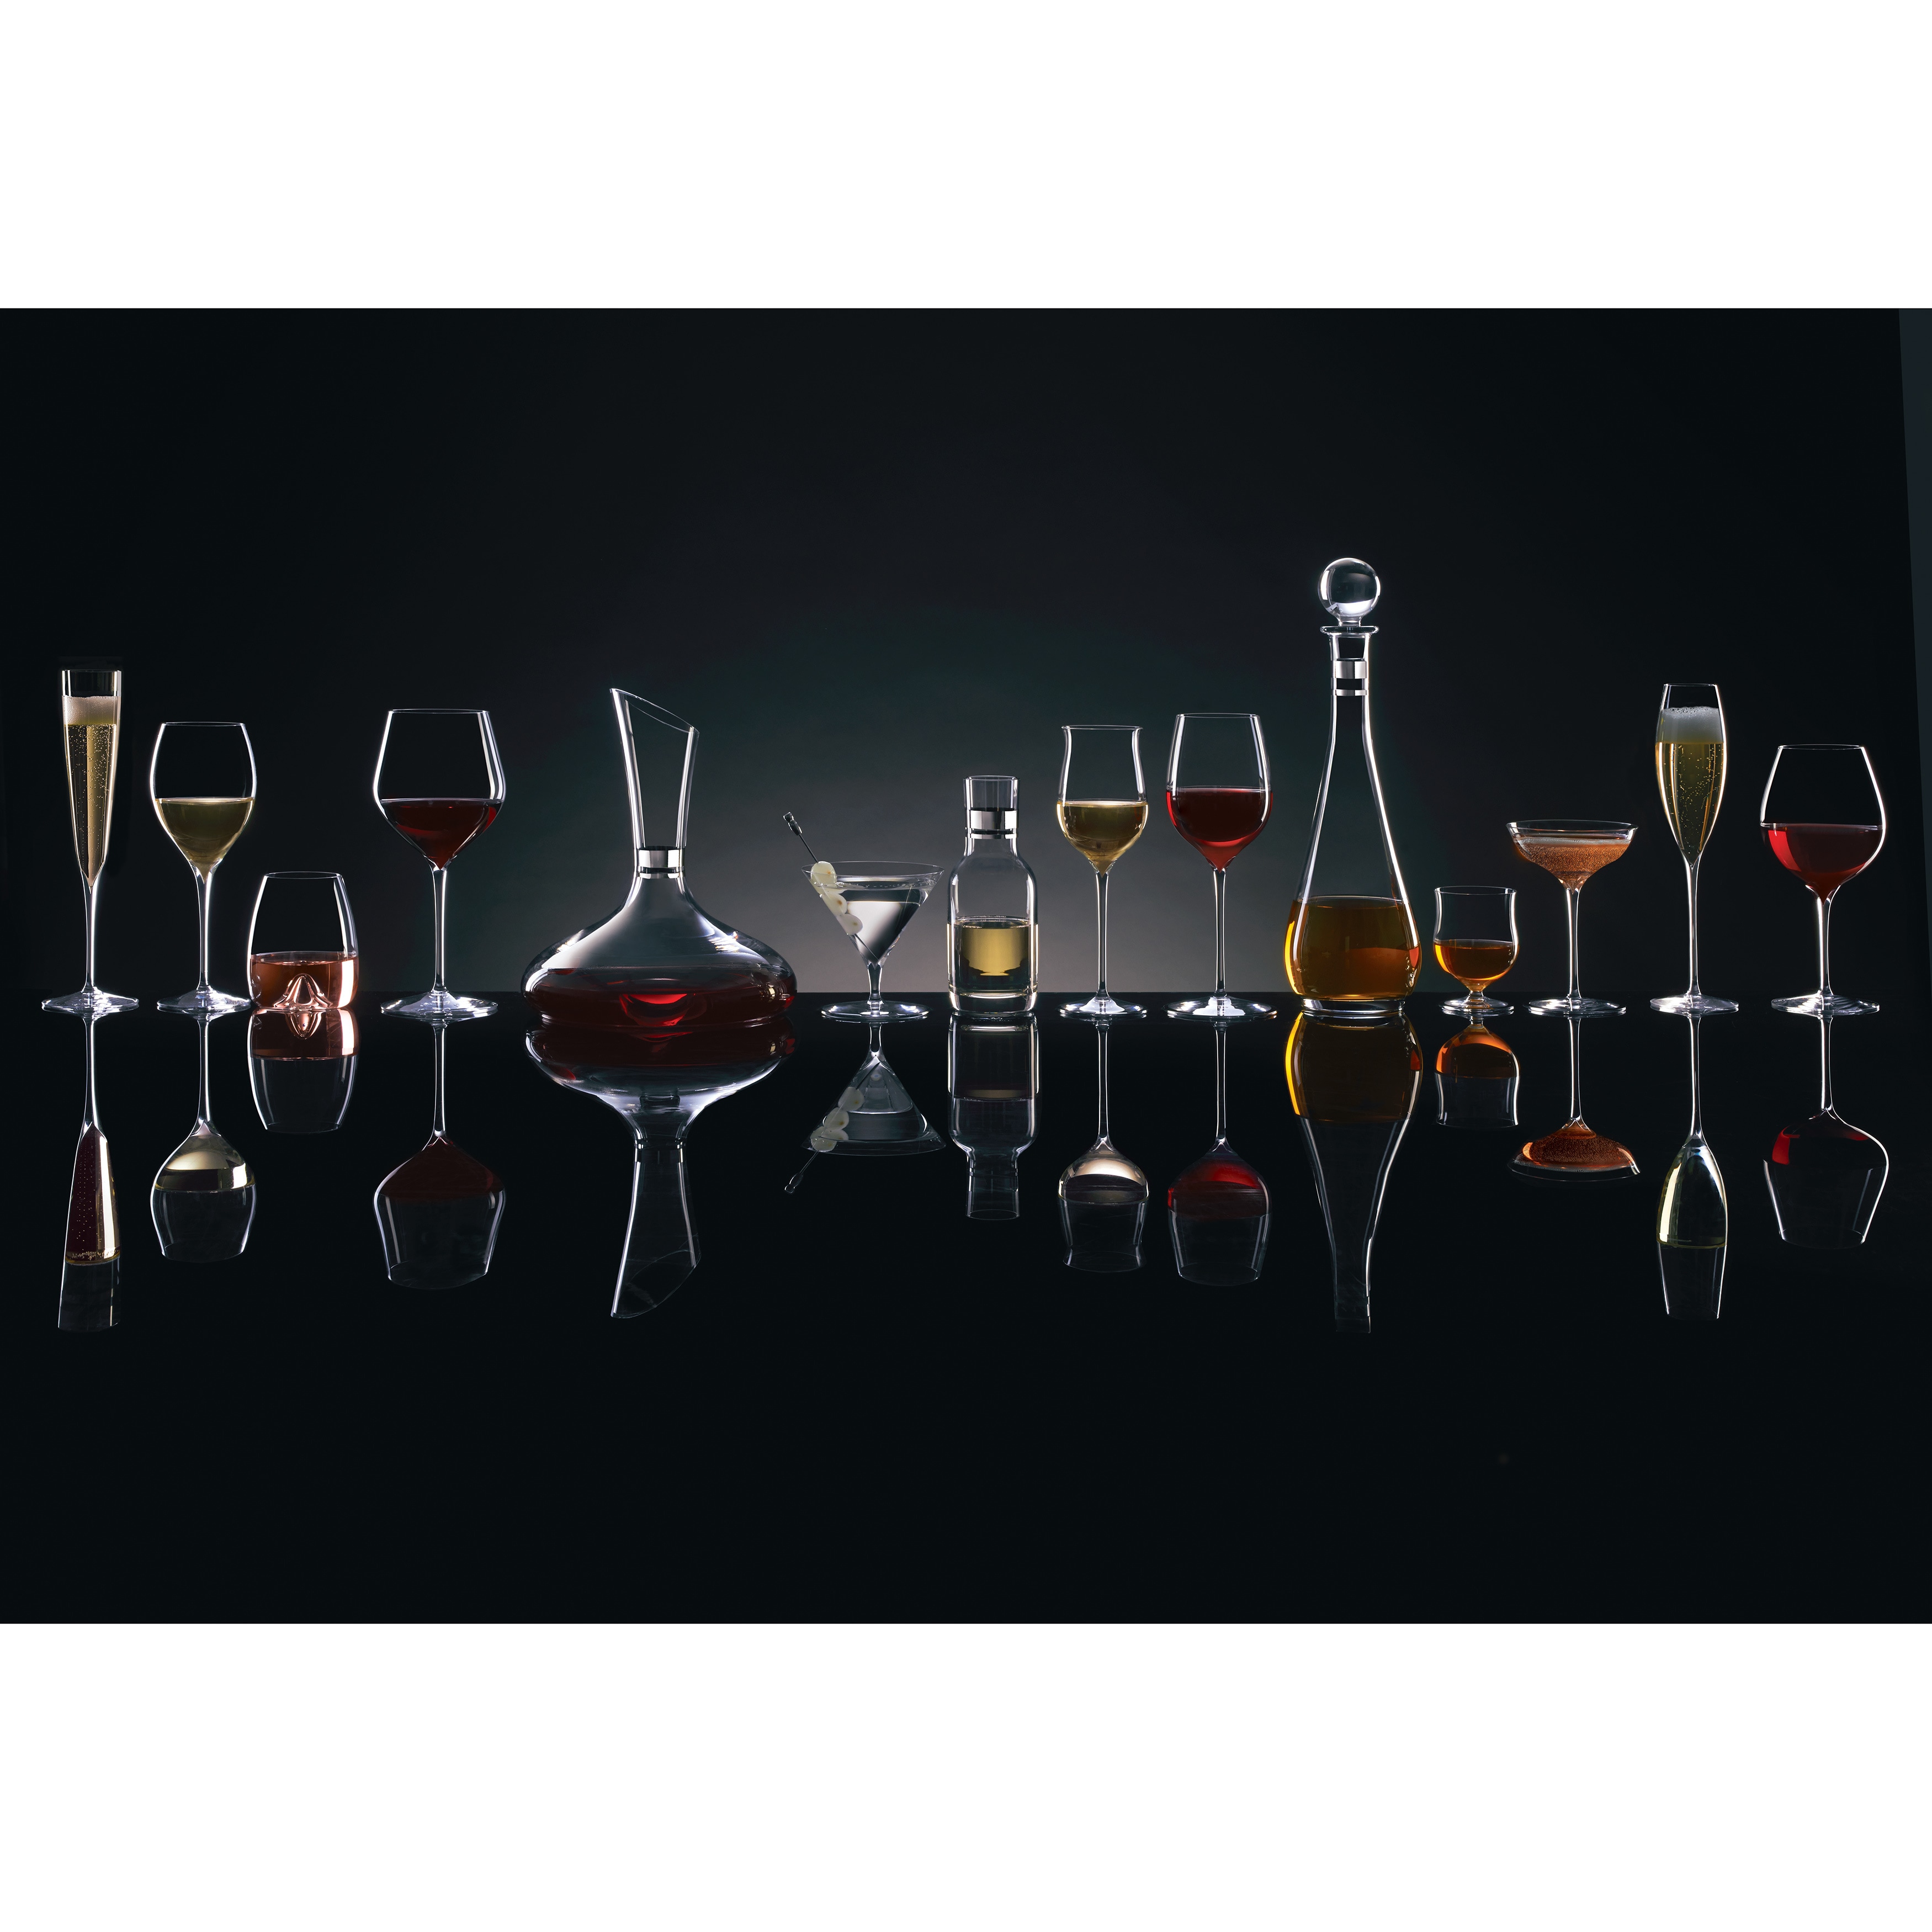 https://ak1.ostkcdn.com/images/products/9048712/Waterford-Elegance-Bordeaux-Wine-Glasses-Set-of-2-73f9985a-23c9-4807-9ac5-7e0ecf1a5e82.jpg